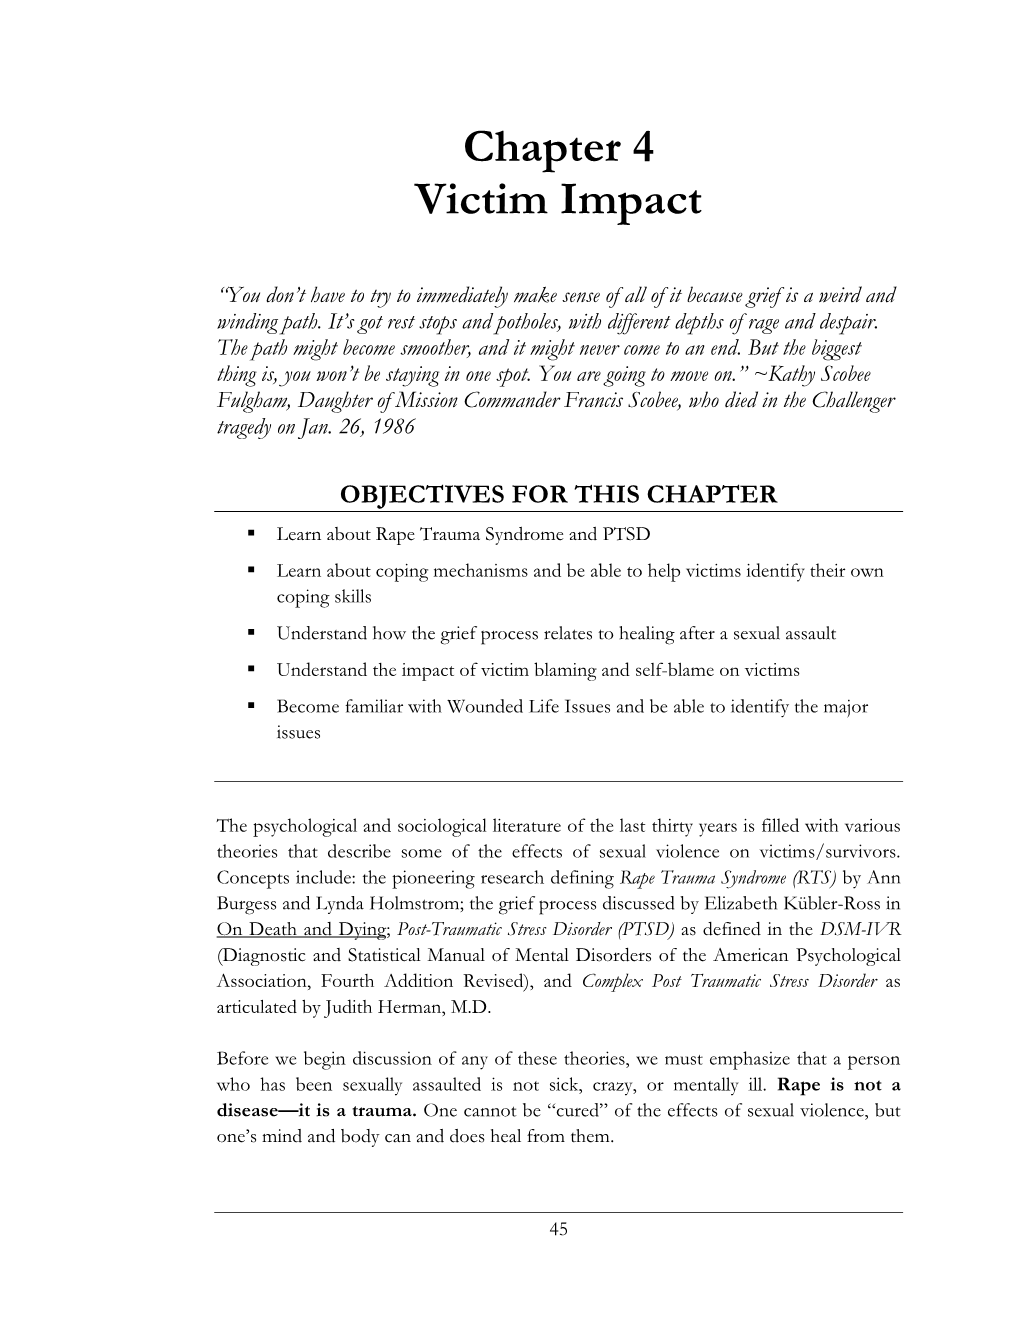 Chapter 4 Victim Impact